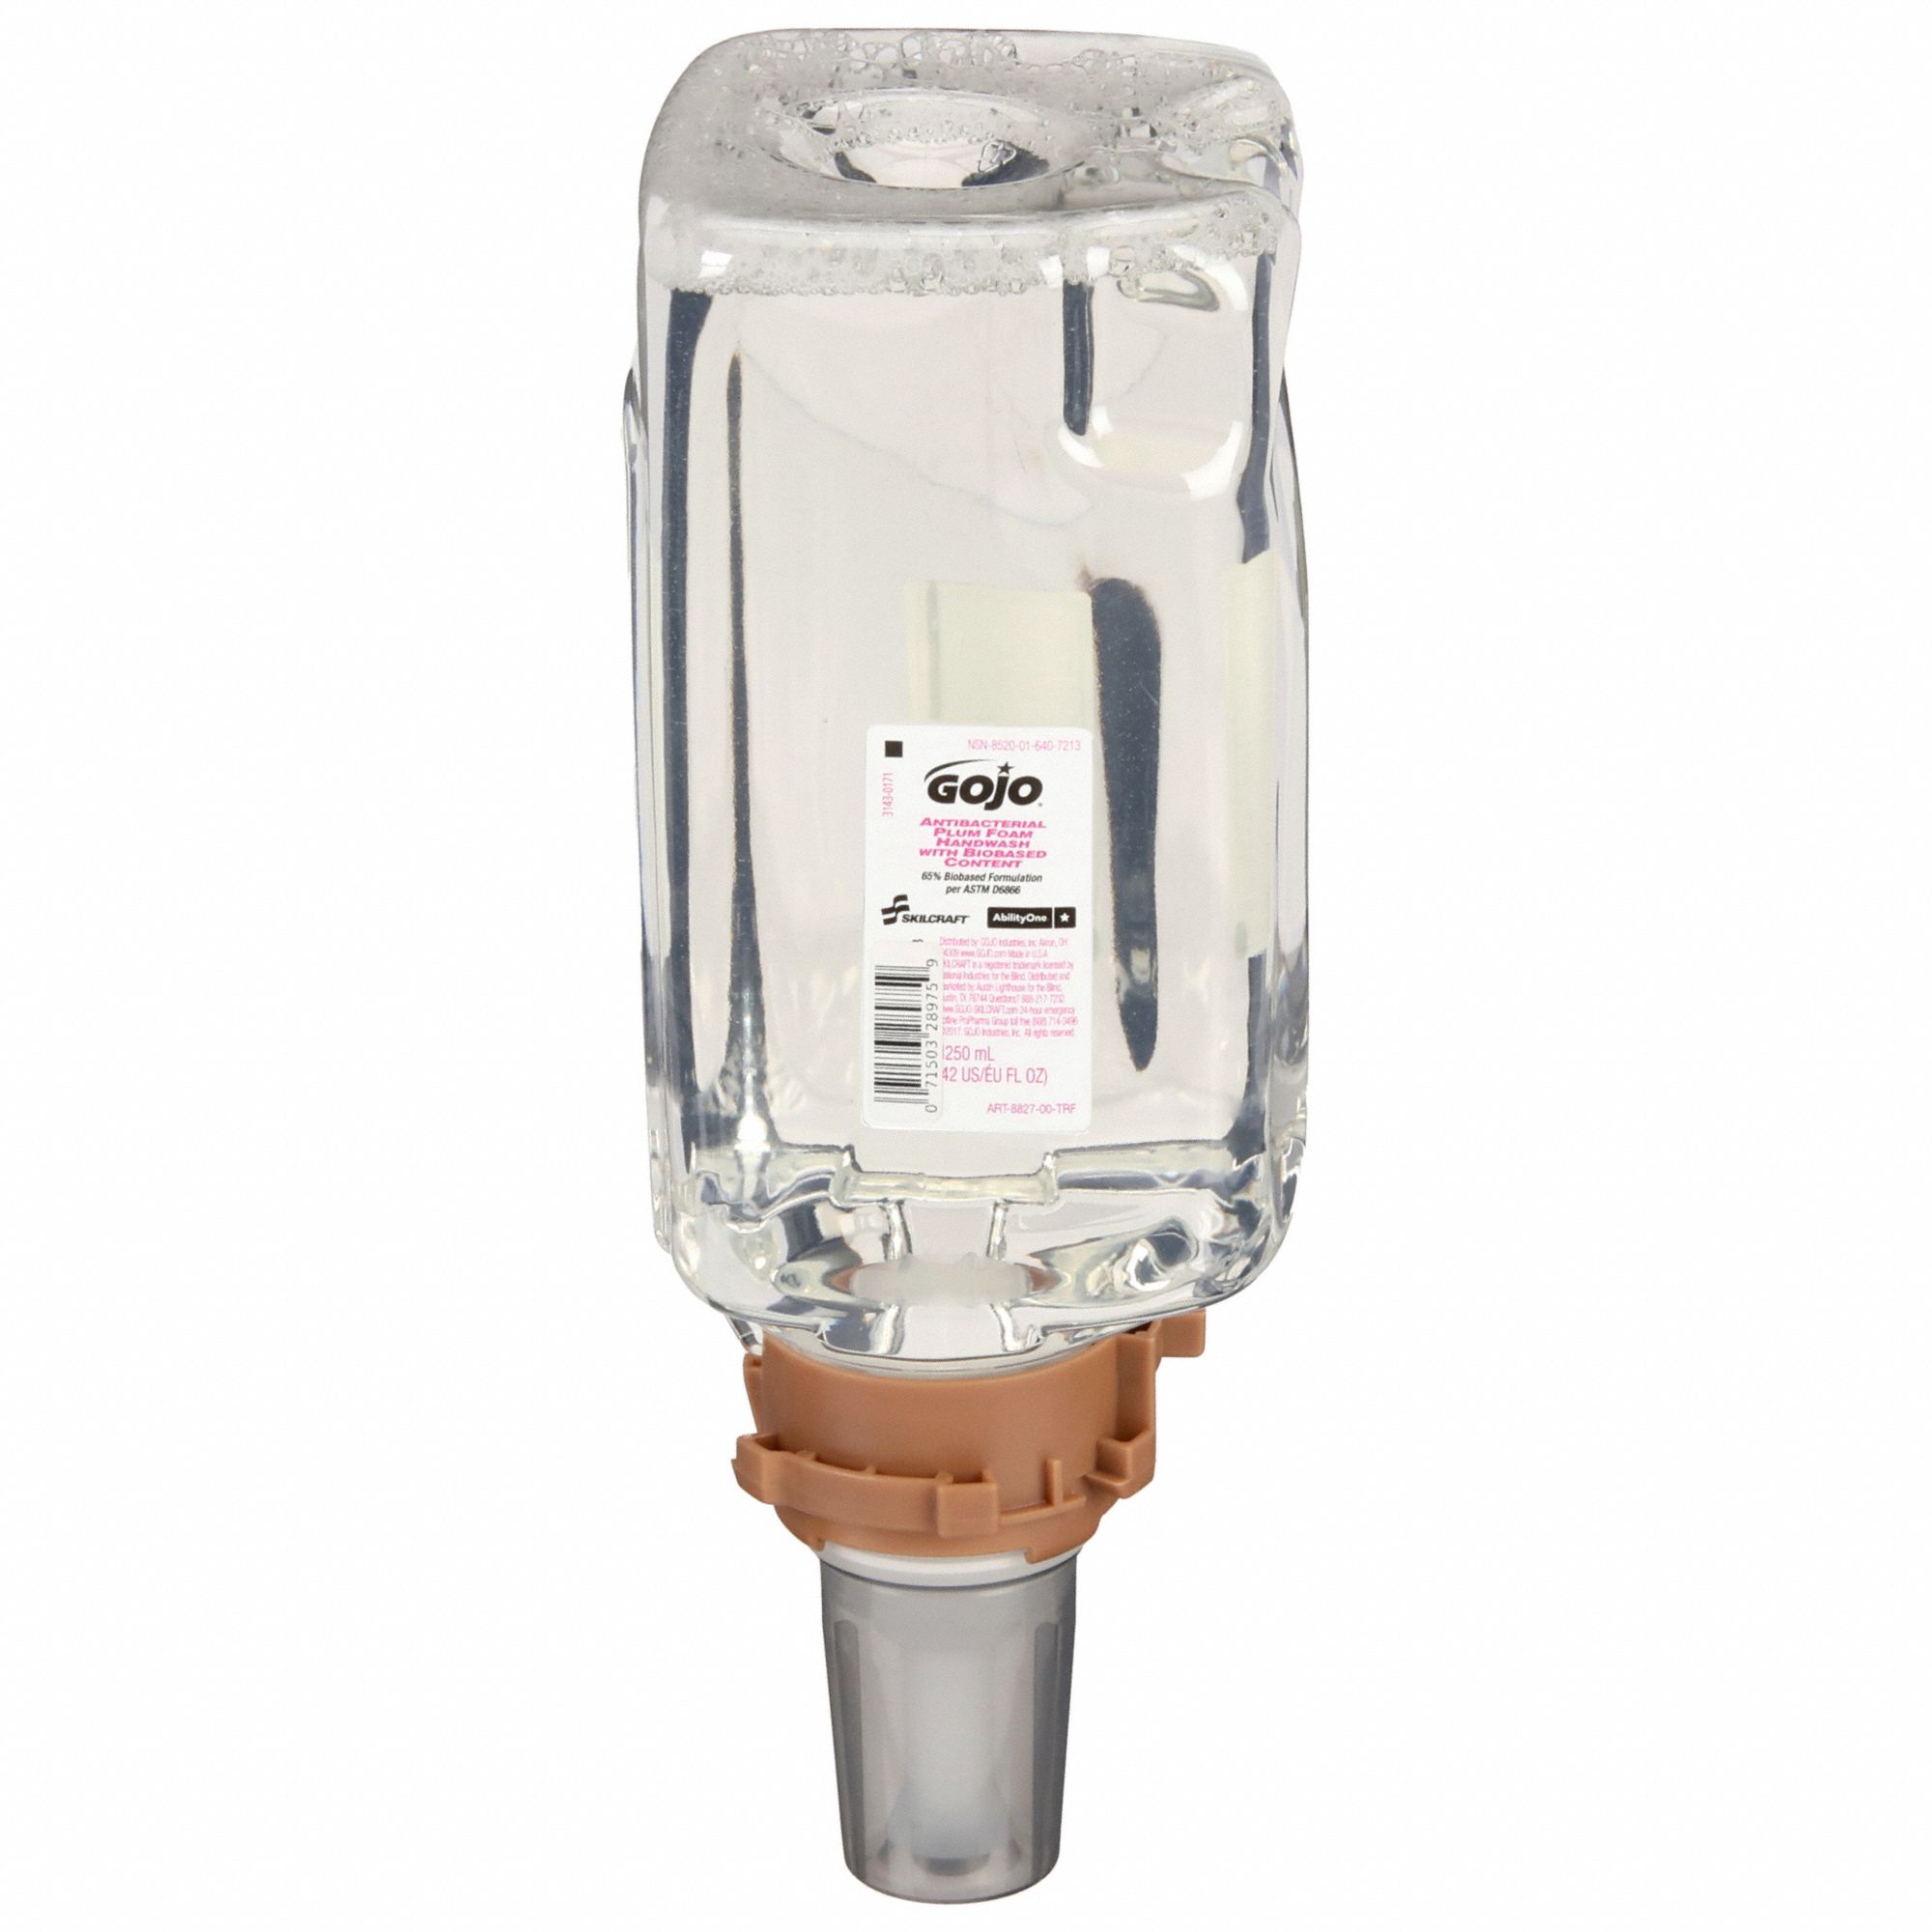 Delta Safe waterless Hand Cleaner With Pump Dispenser – Delta Distributing